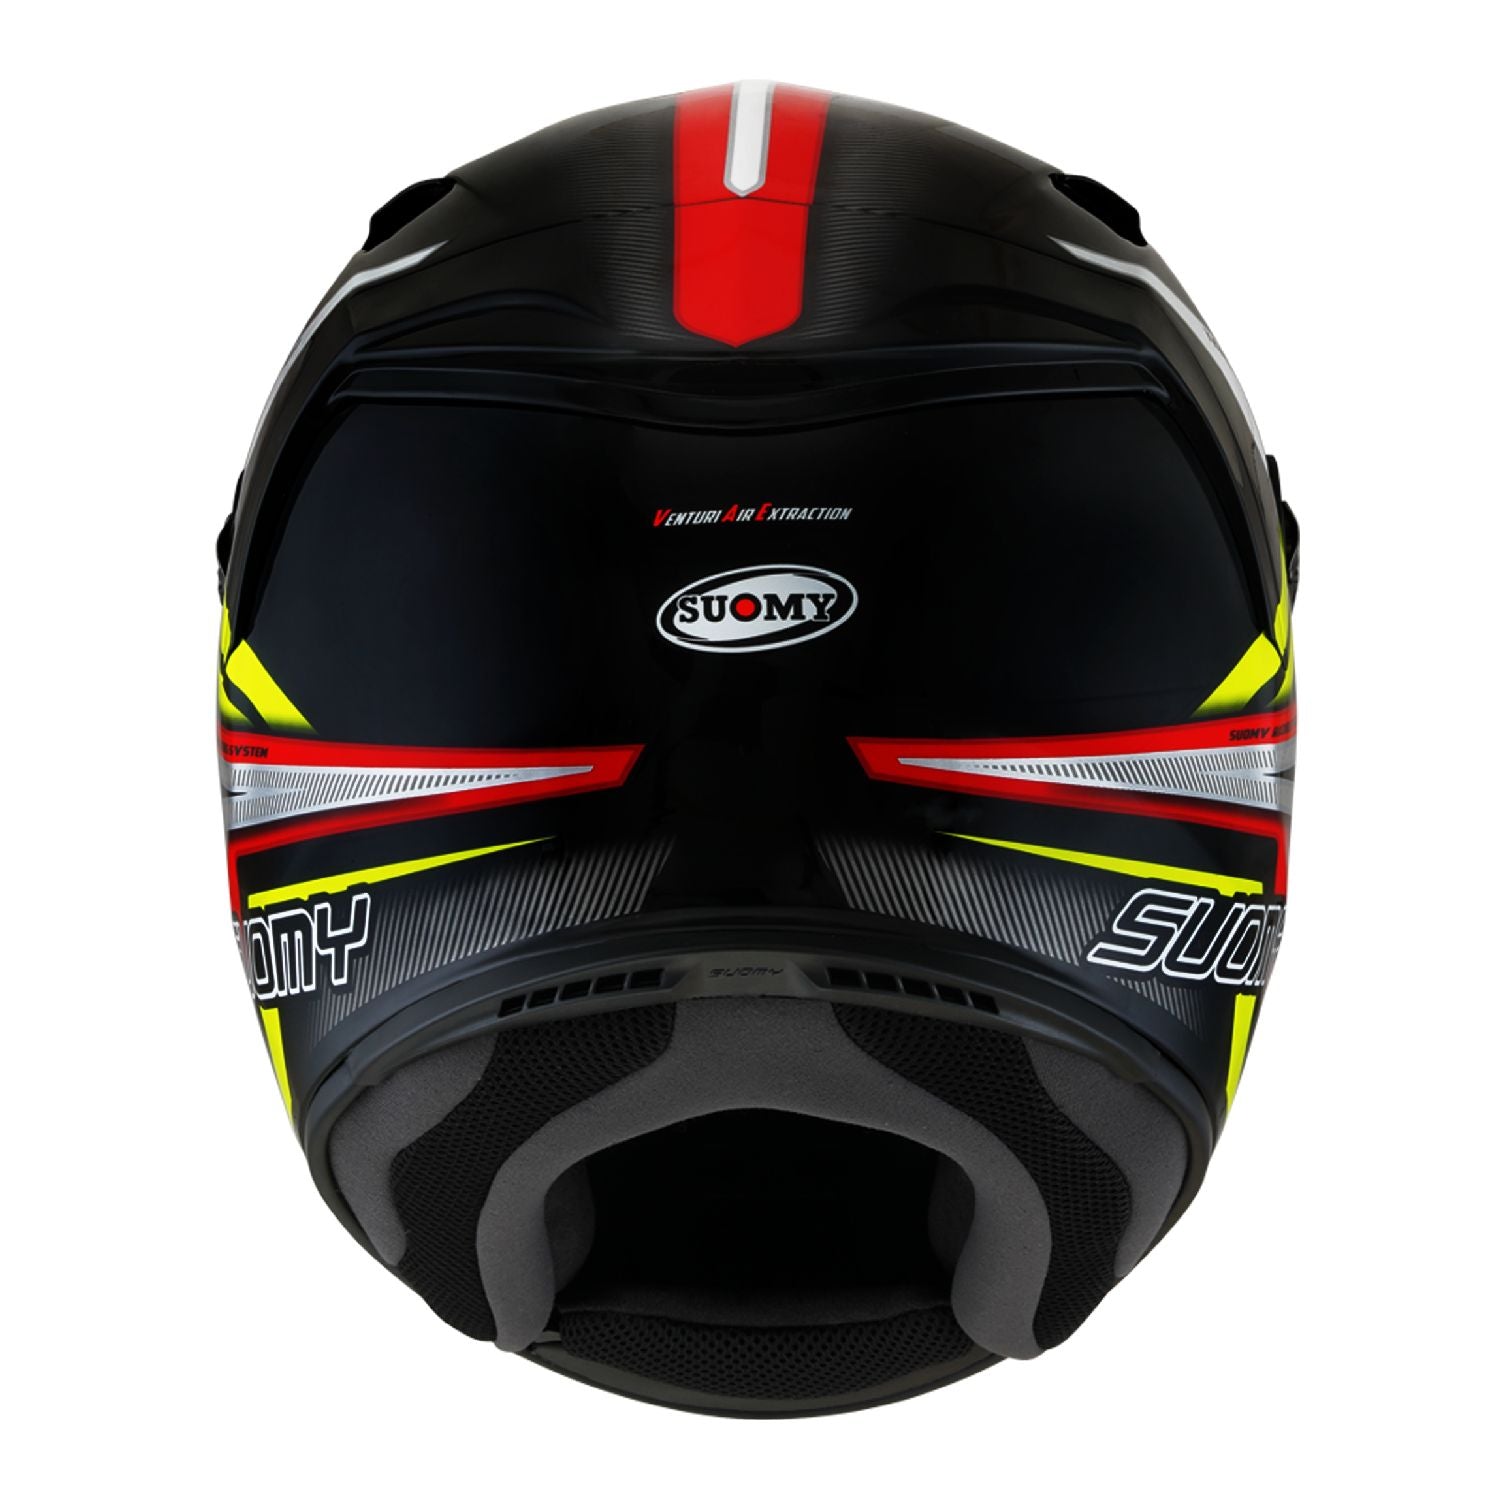 Suomy SR-Sport Attraction Full Face Motorcycle Helmet (XS - 2XL)